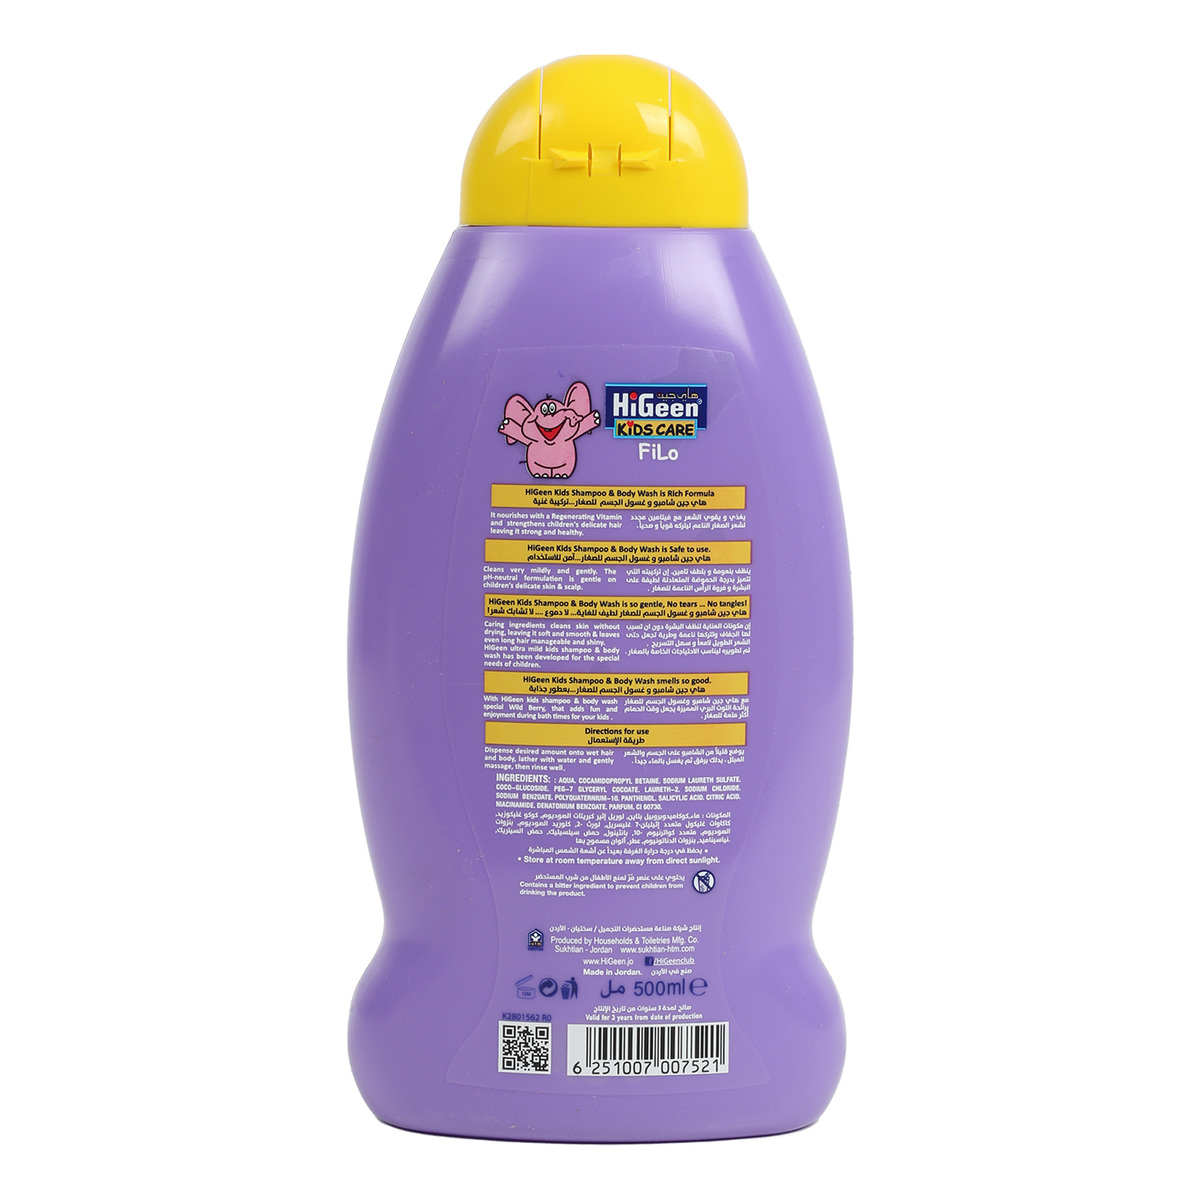 Hi Geen Wild Berry Filo Kids Shampoo & Body Wash 500 ml